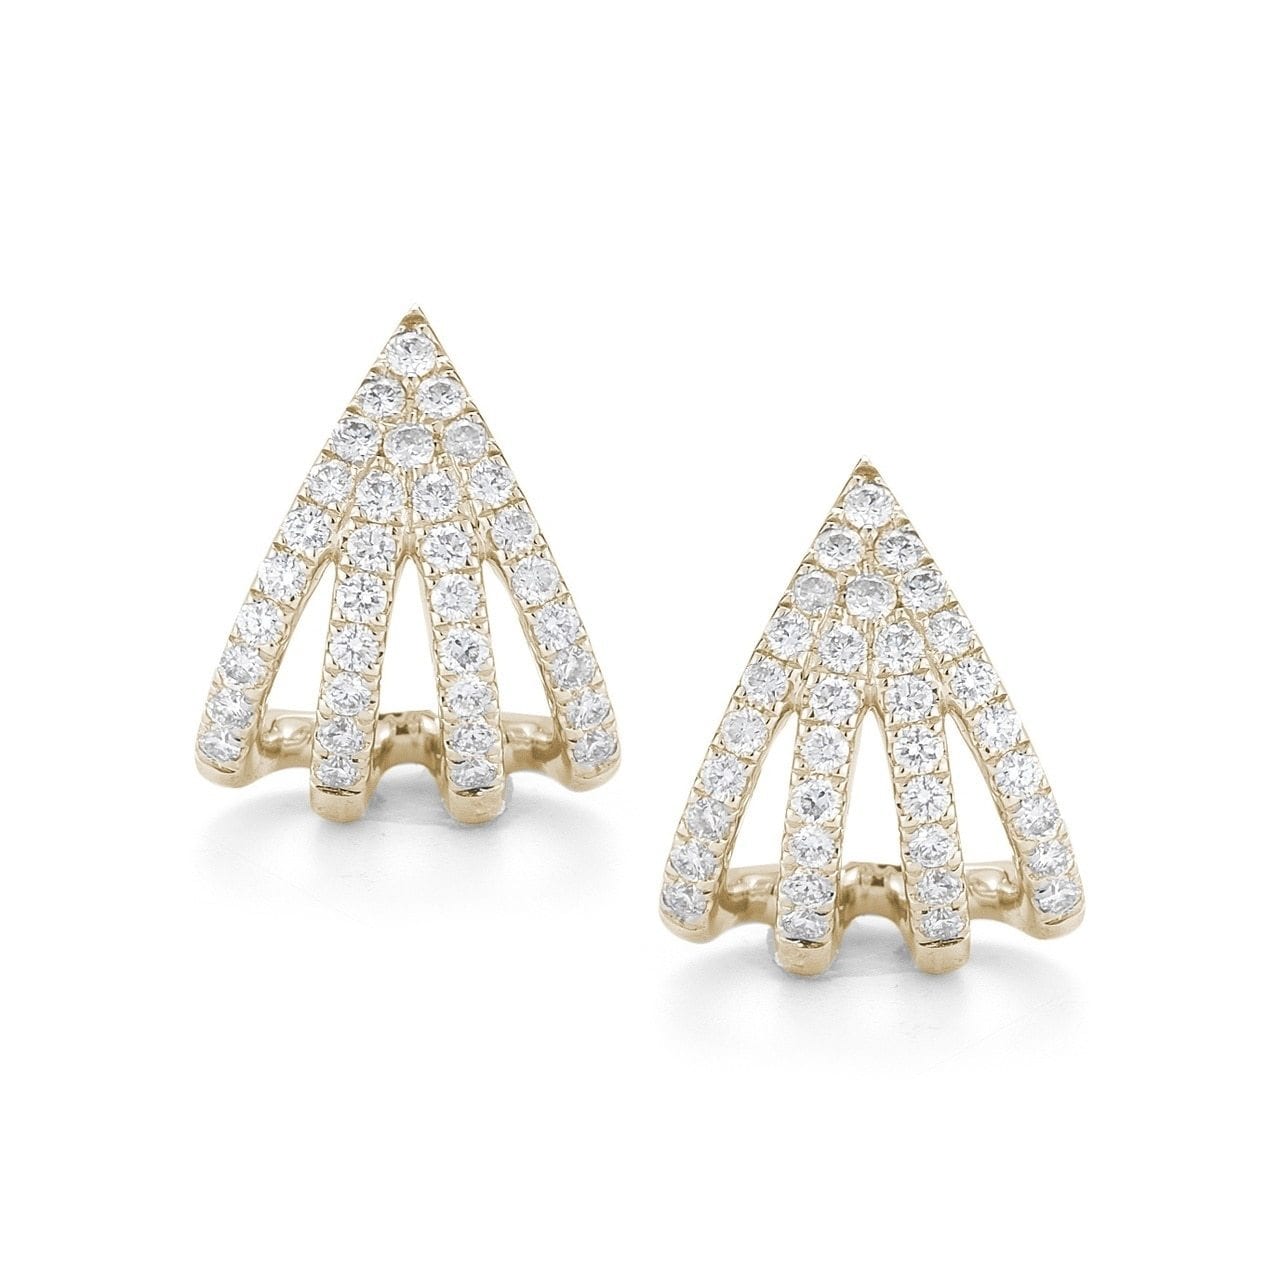 Vincents Fine Jewelry | Dana Rebecca | Sarah Leah Burst Diamond Huggie